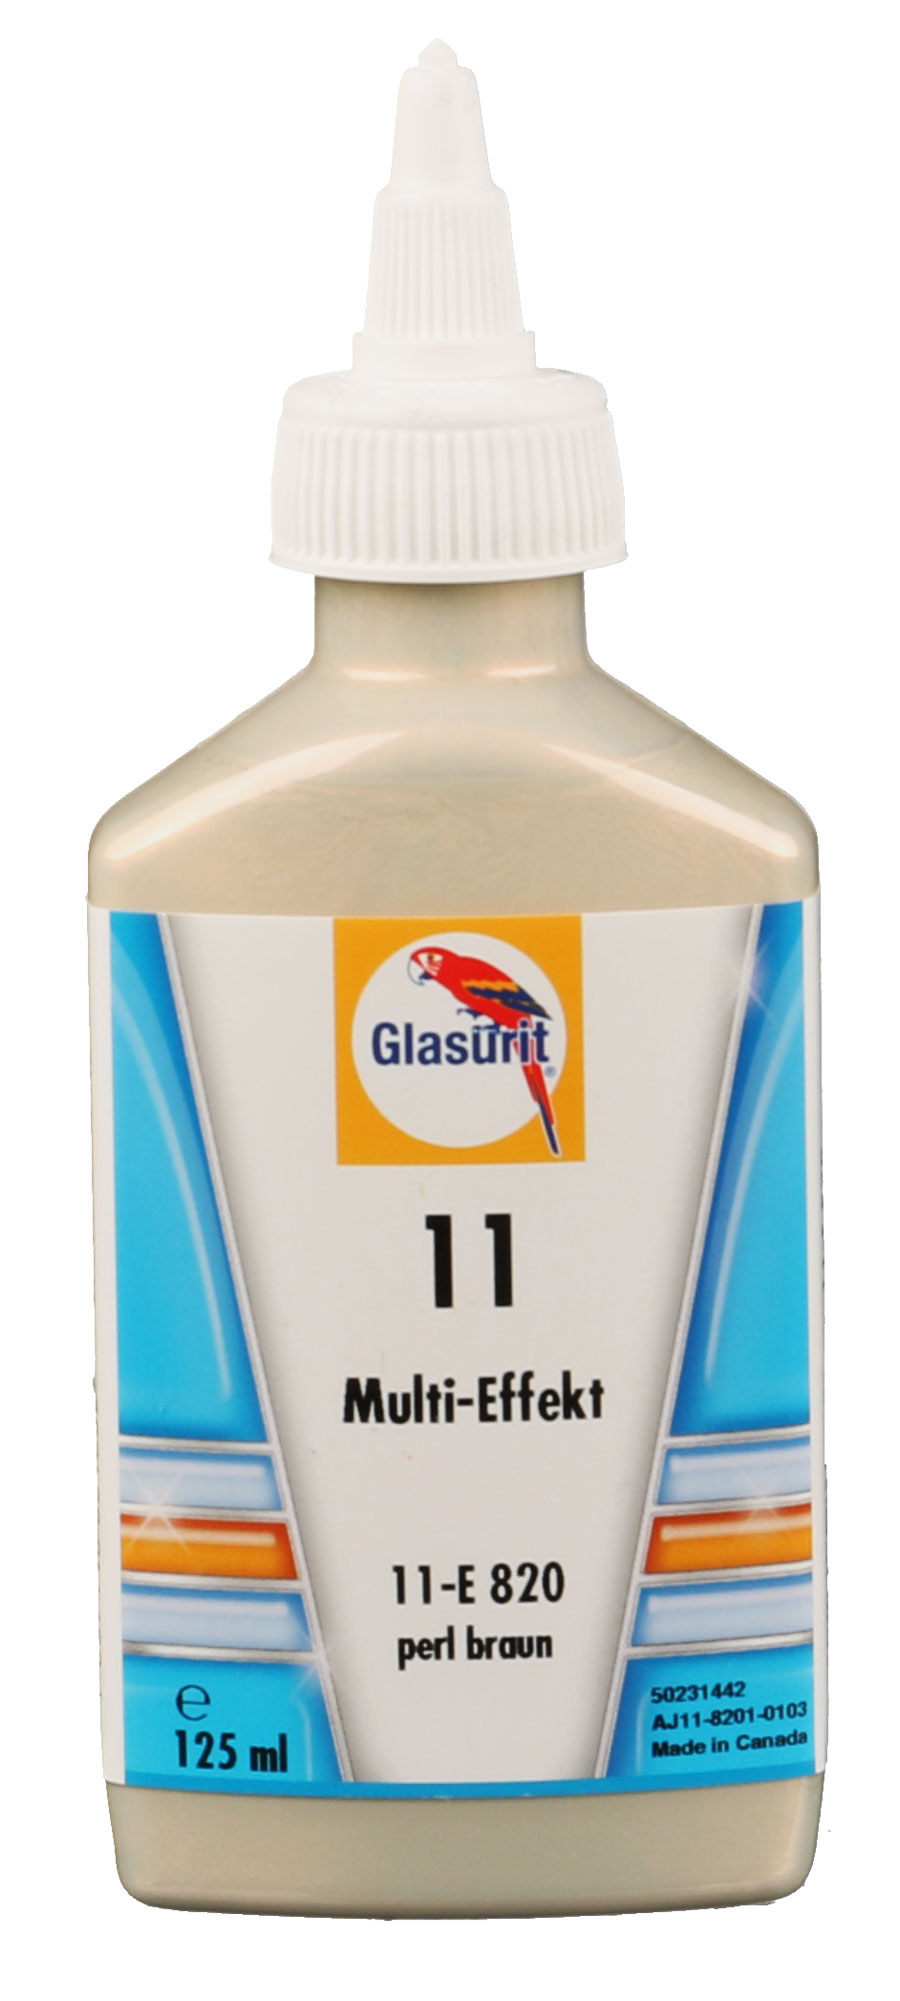 Glasurit Multi-Effekt-Basis  11-E820 perlbraun